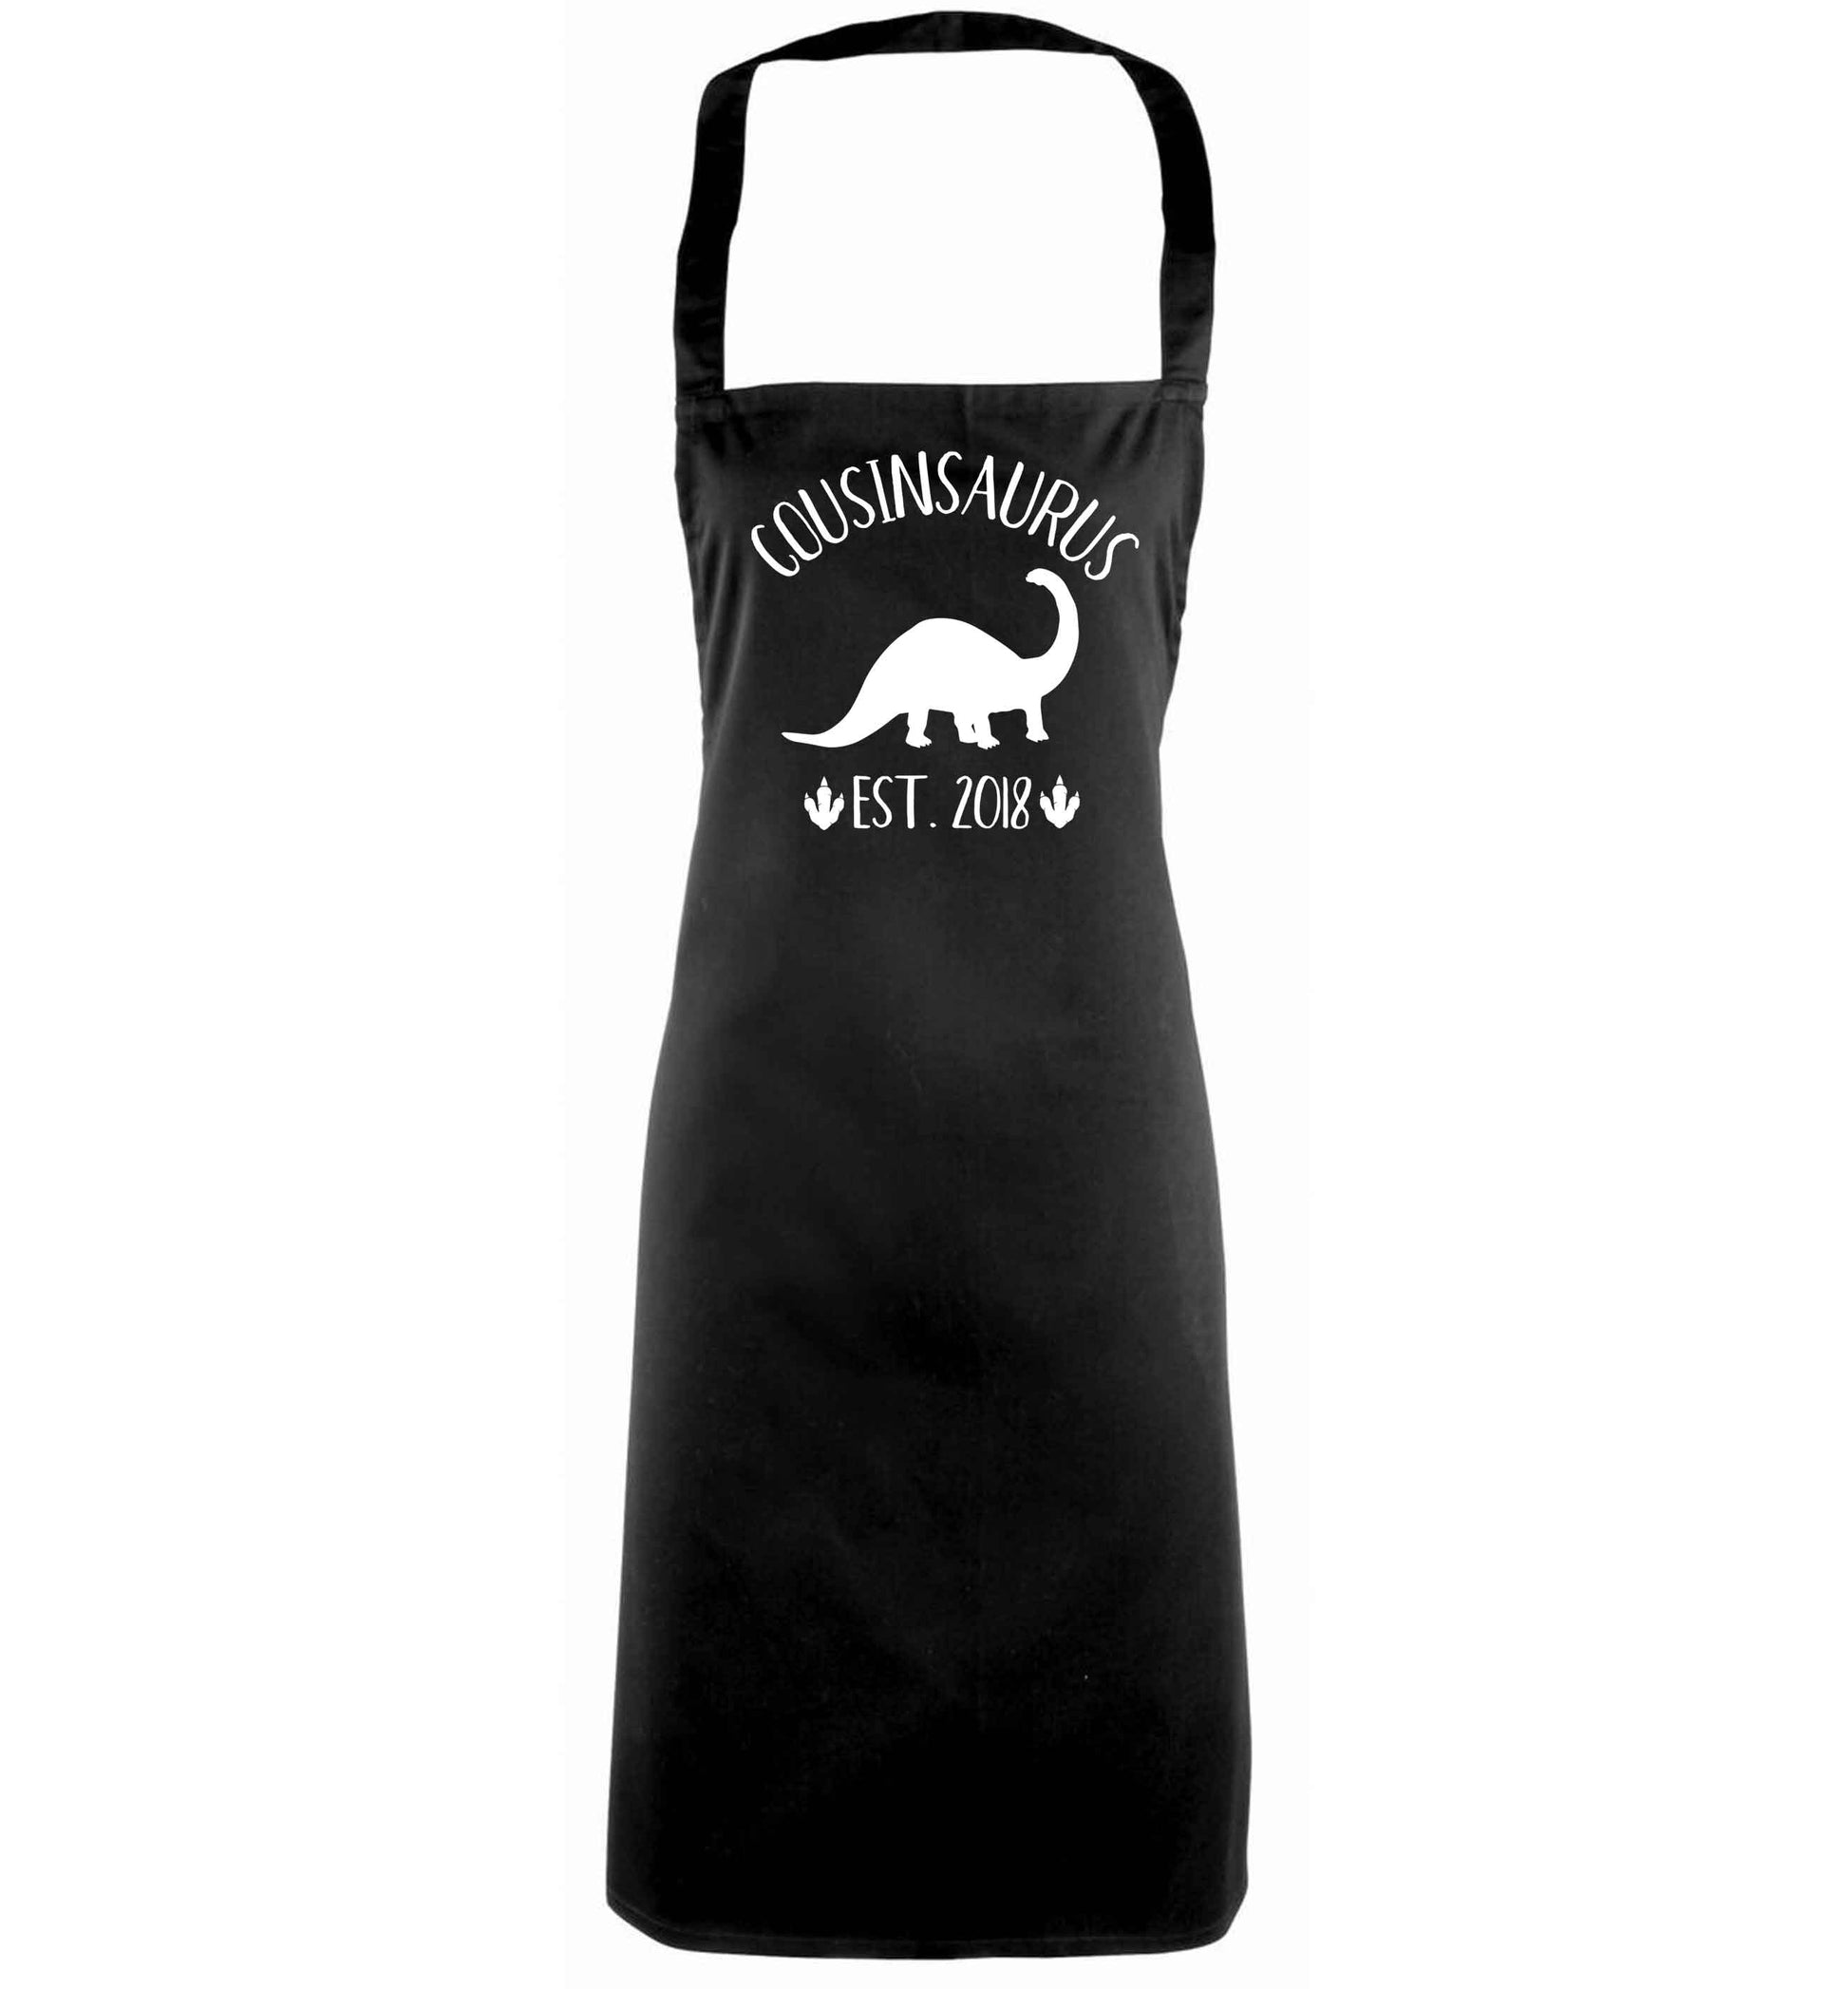 Personalised cousinsaurus since (custom date) black apron